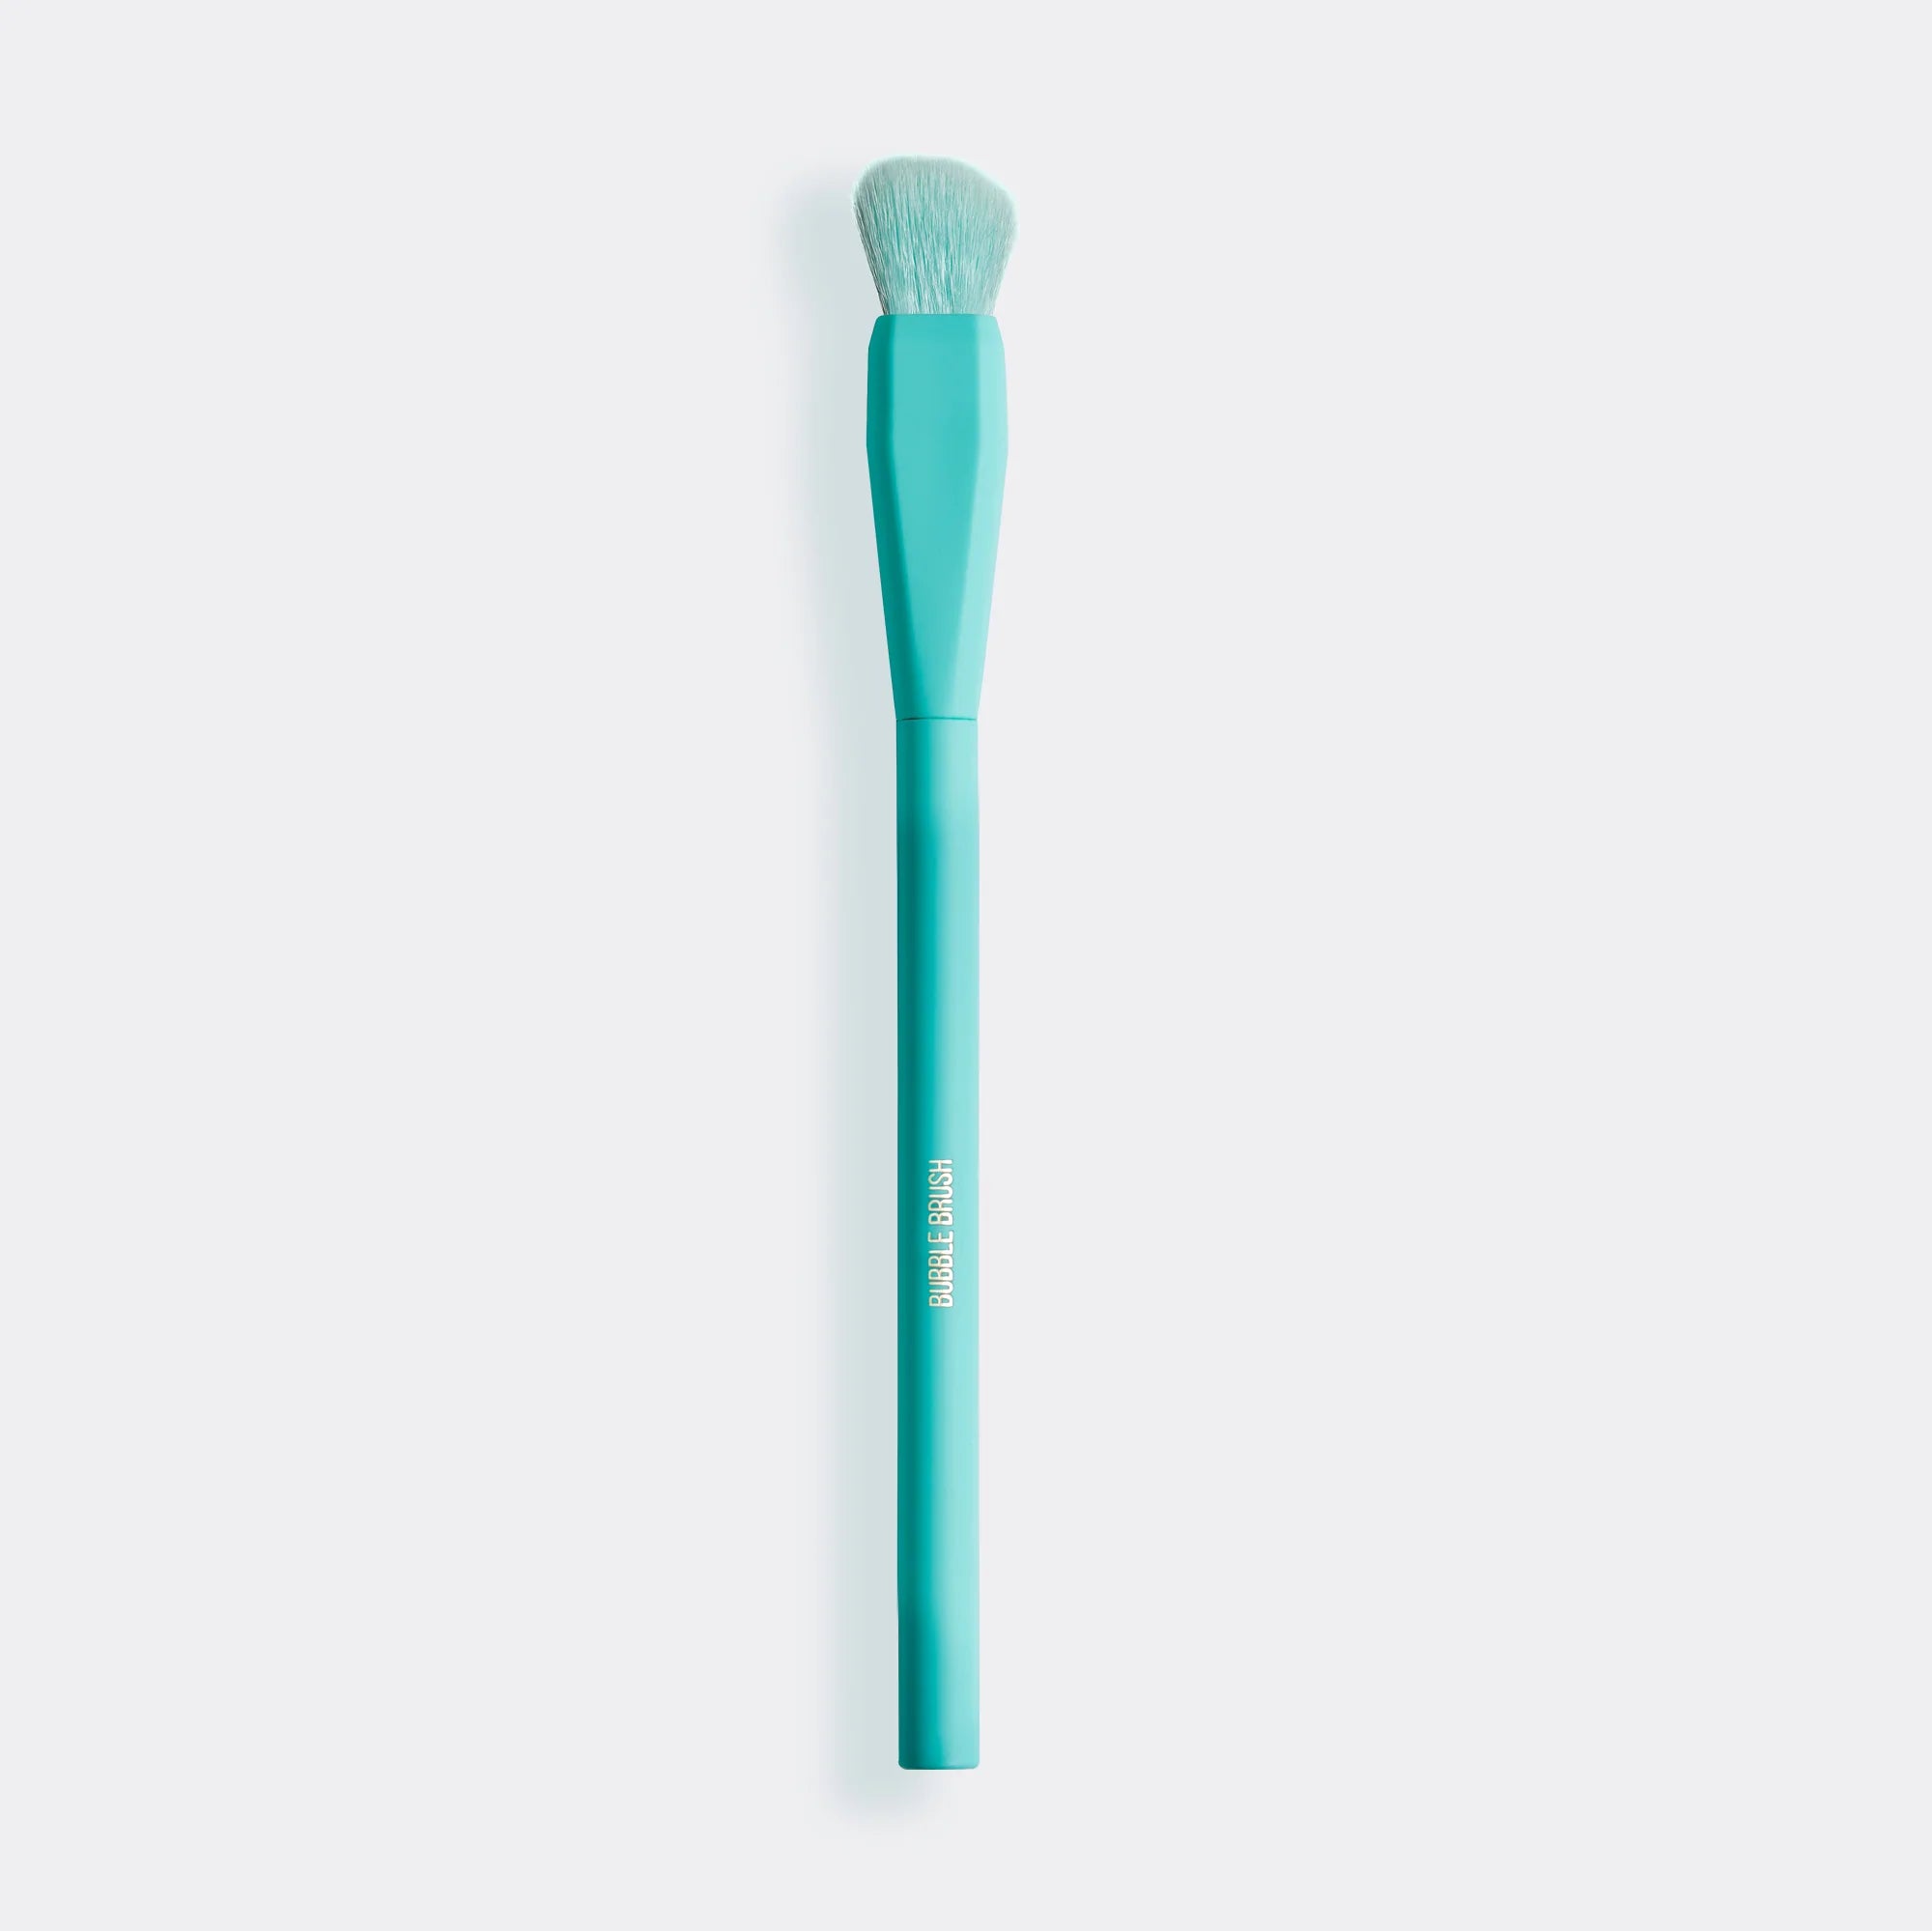 LBLA Bubble Cleansing Brush - Eyelash Brush